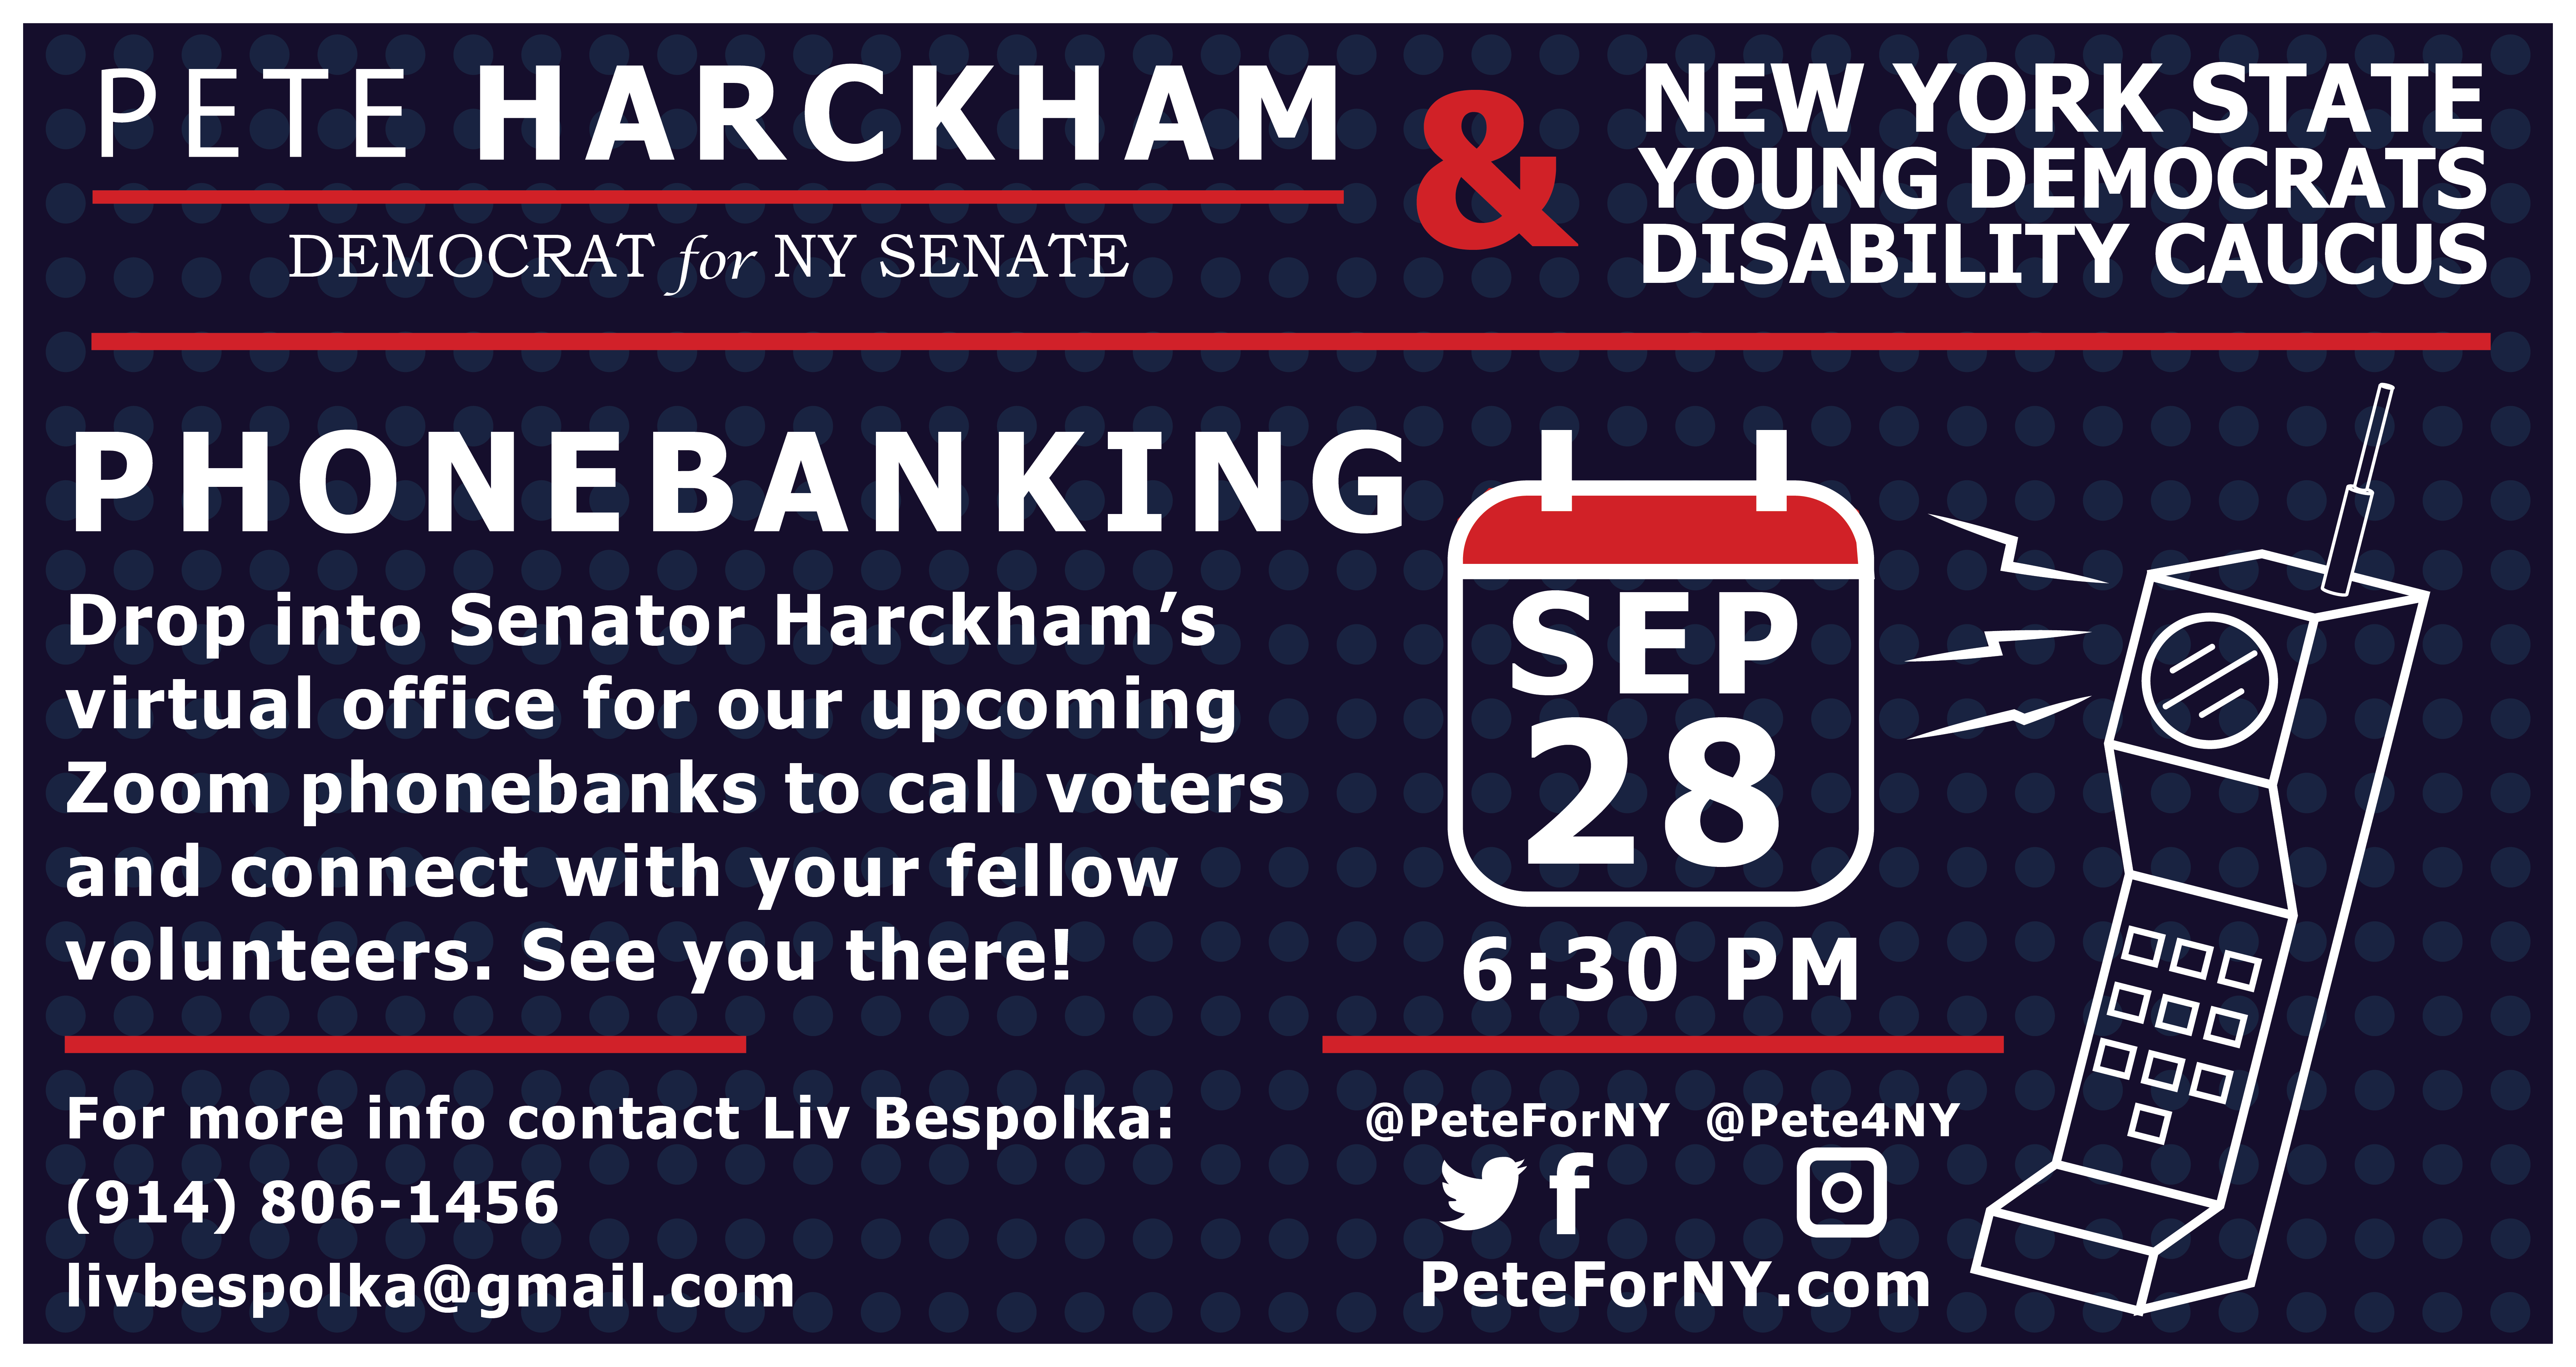 Disability Issues Caucus Phonebank for Sen. Pete Harckham